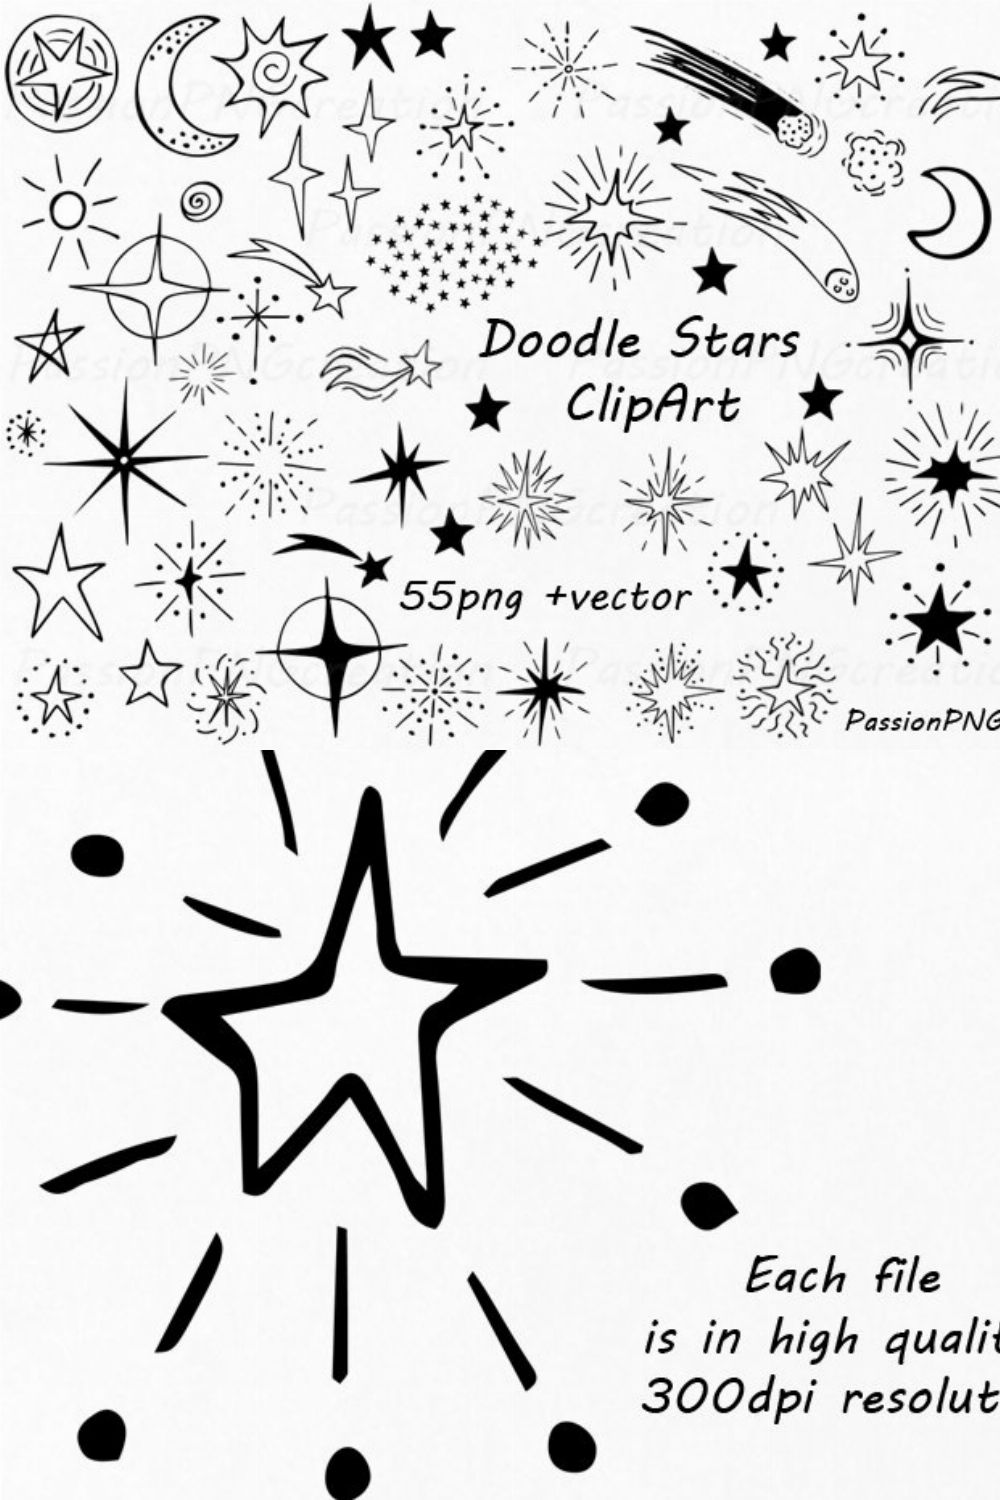 Doodle Stars Clipart pinterest preview image.